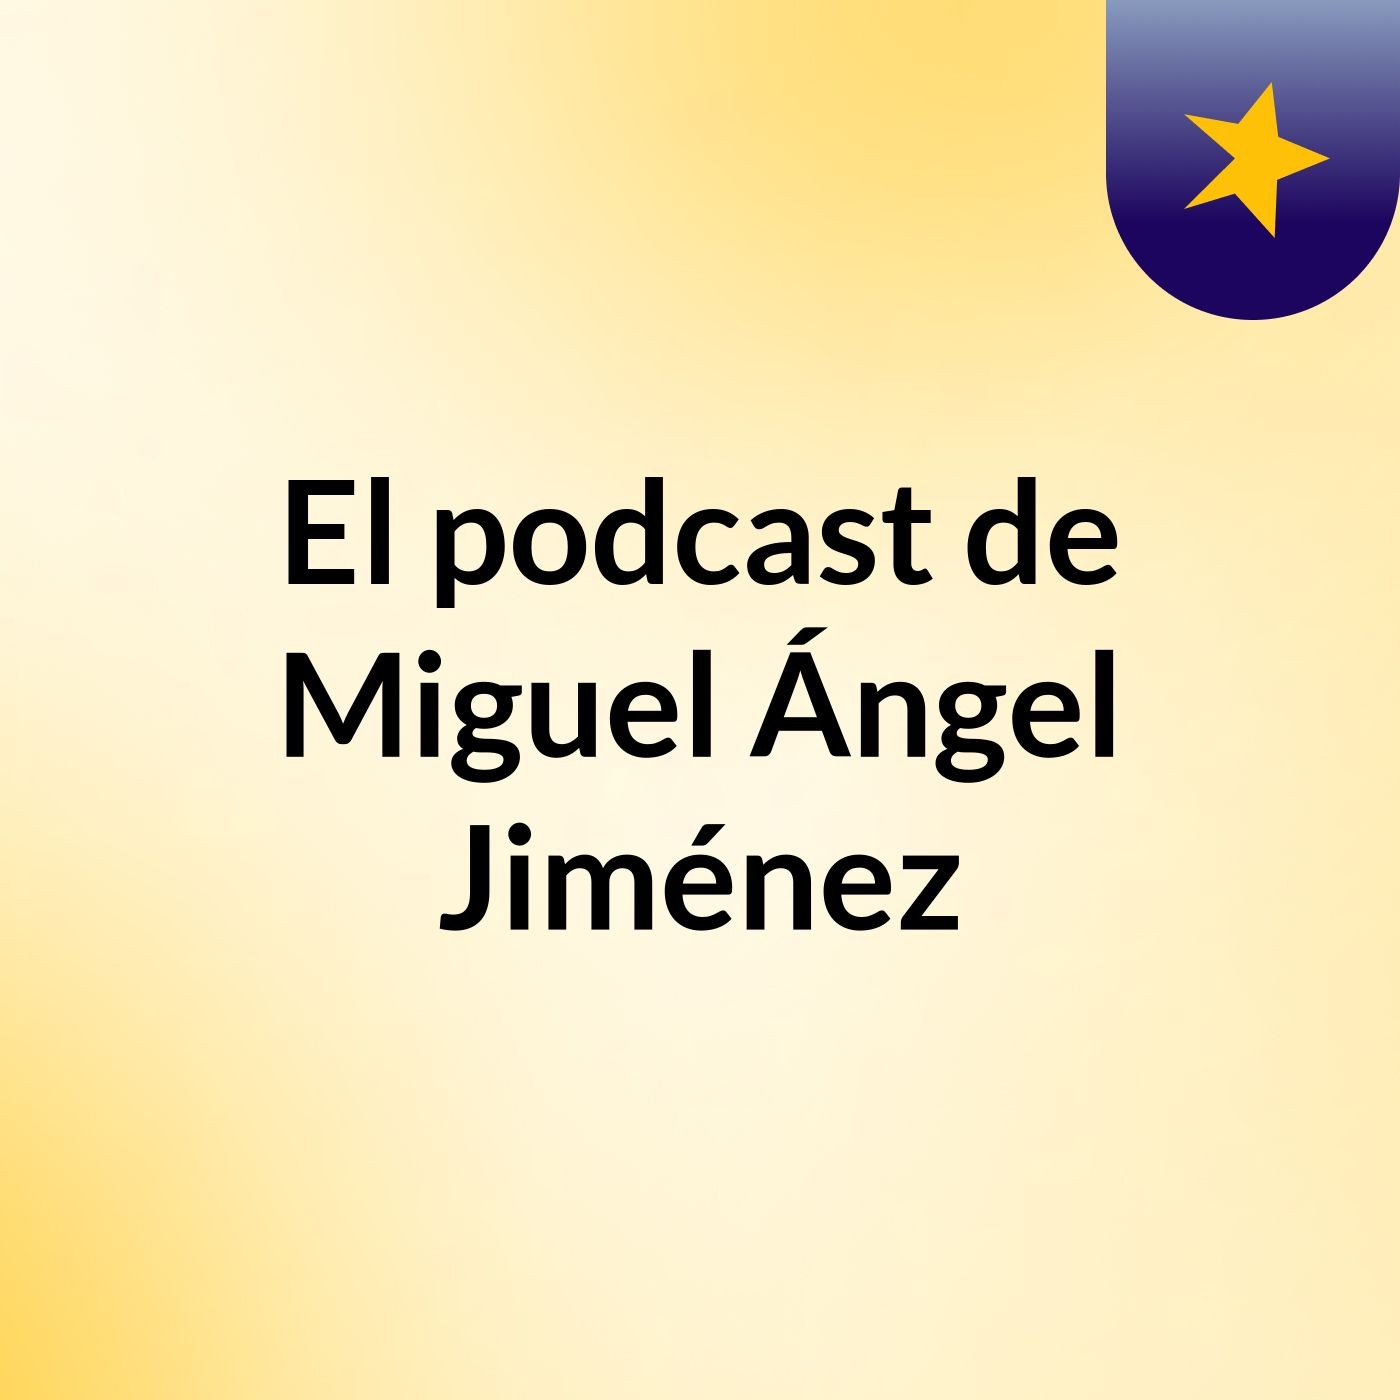 El podcast de Miguel Ángel Jiménez